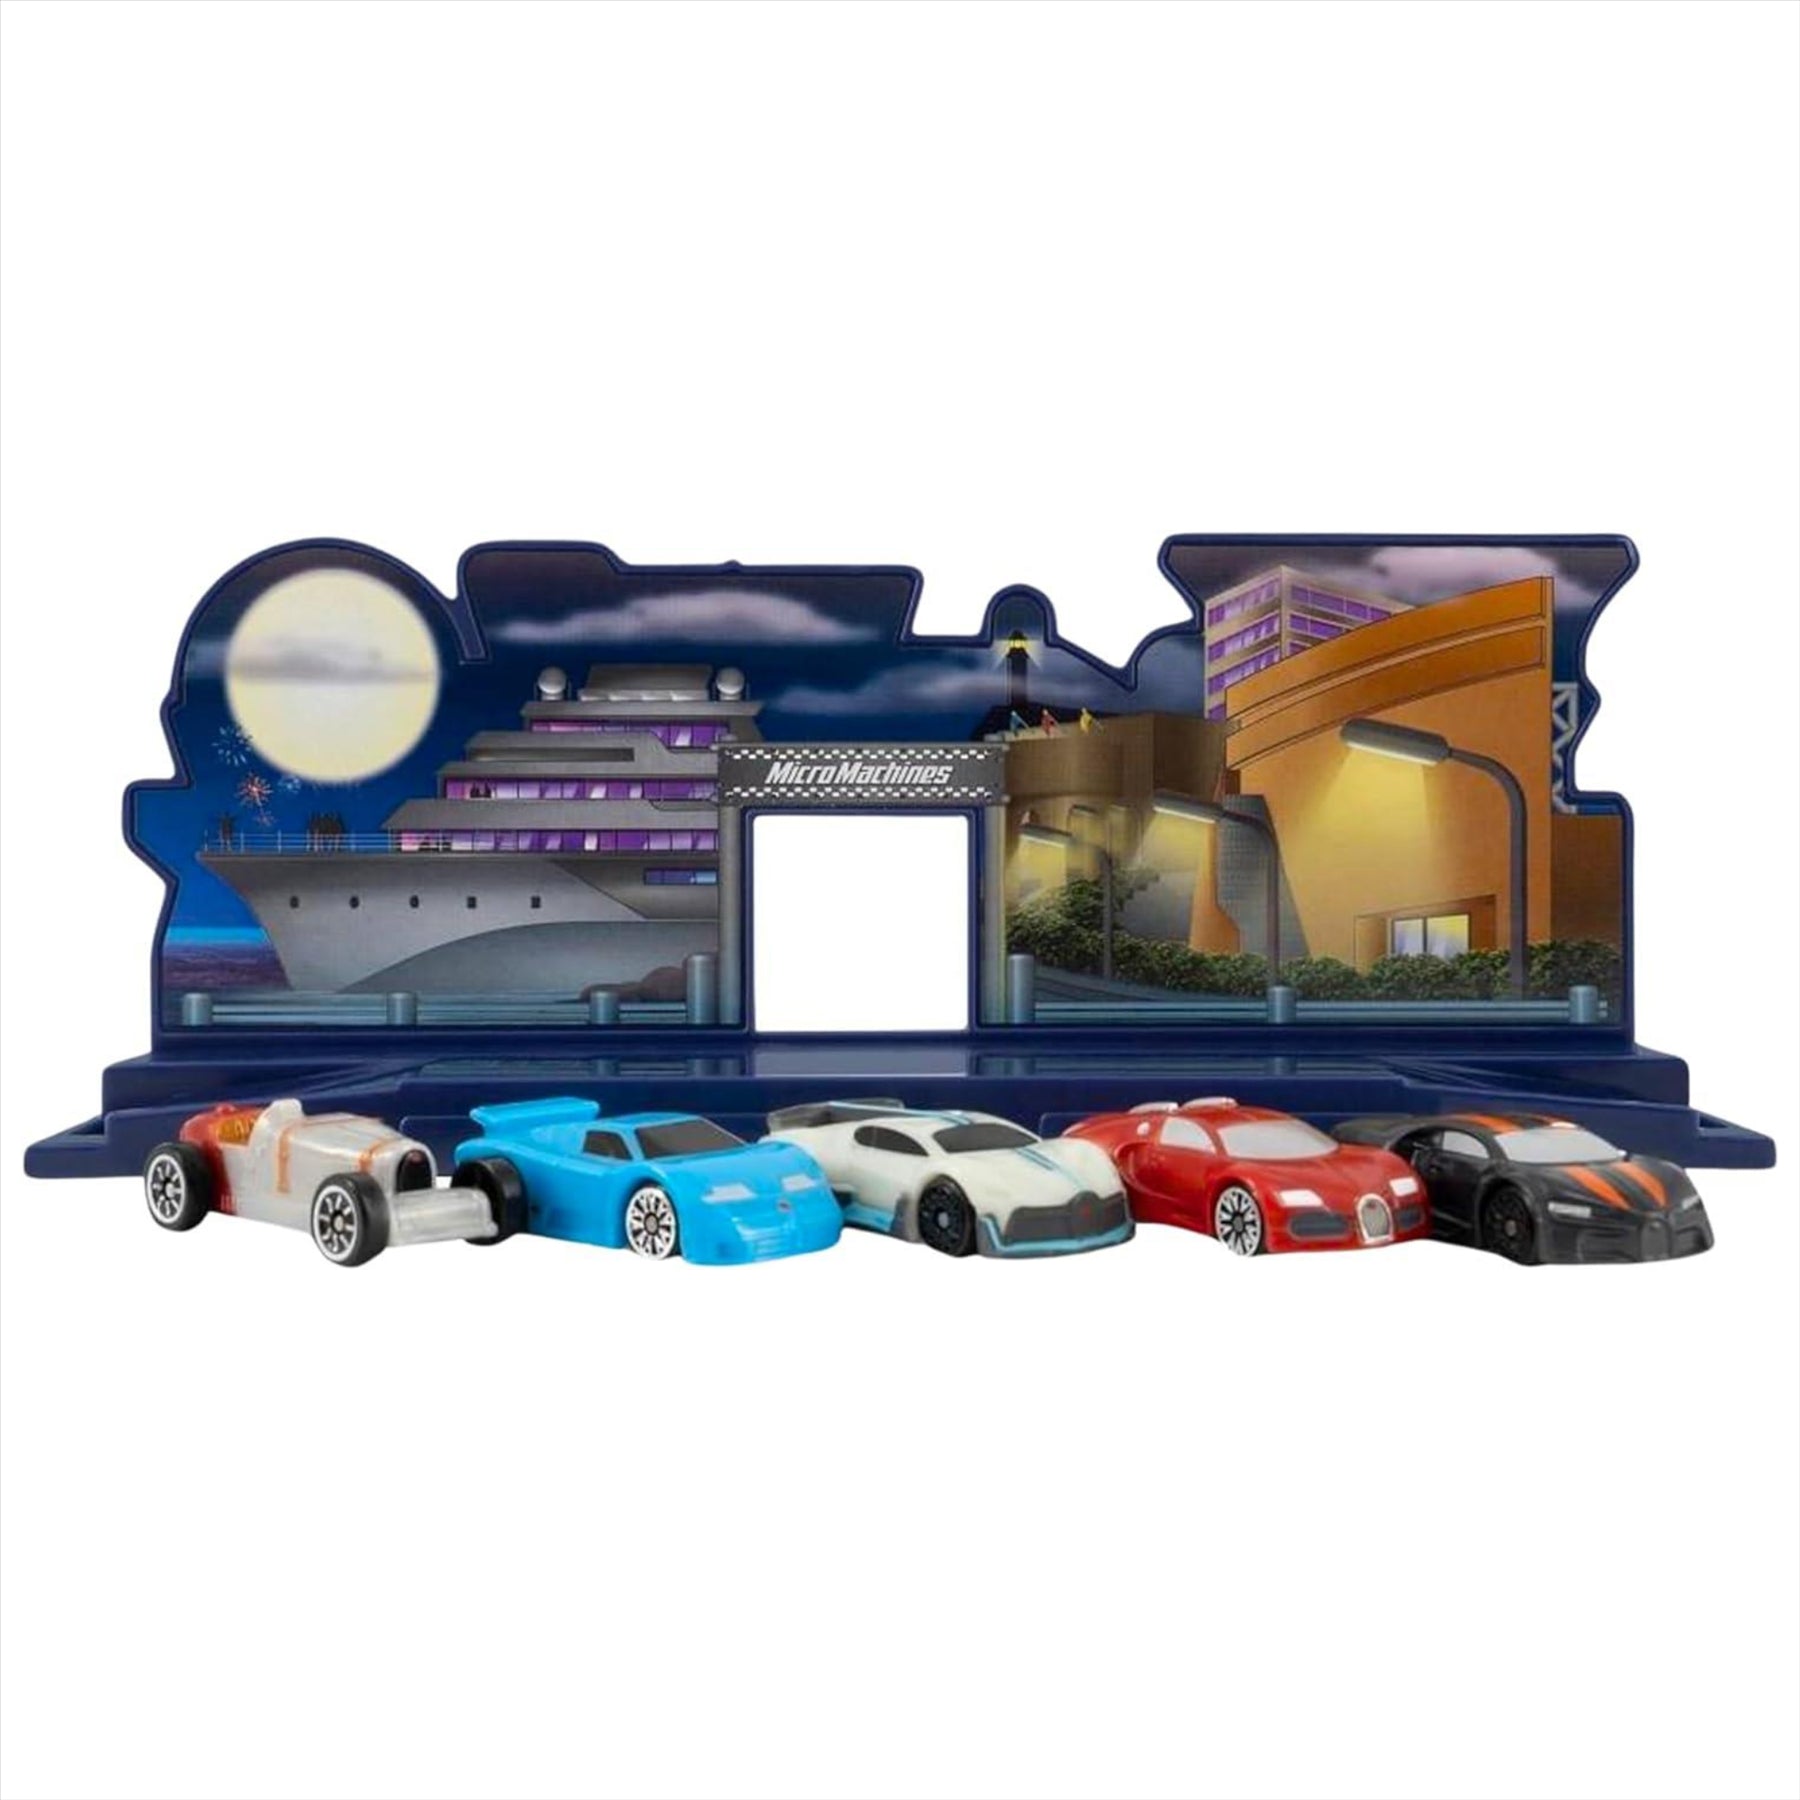 Micro Machines - Blue Mini Vehicle Hauler With 1 Exclusive Vehicle & World Pack #14 Bugatti Speed Legends - Toptoys2u